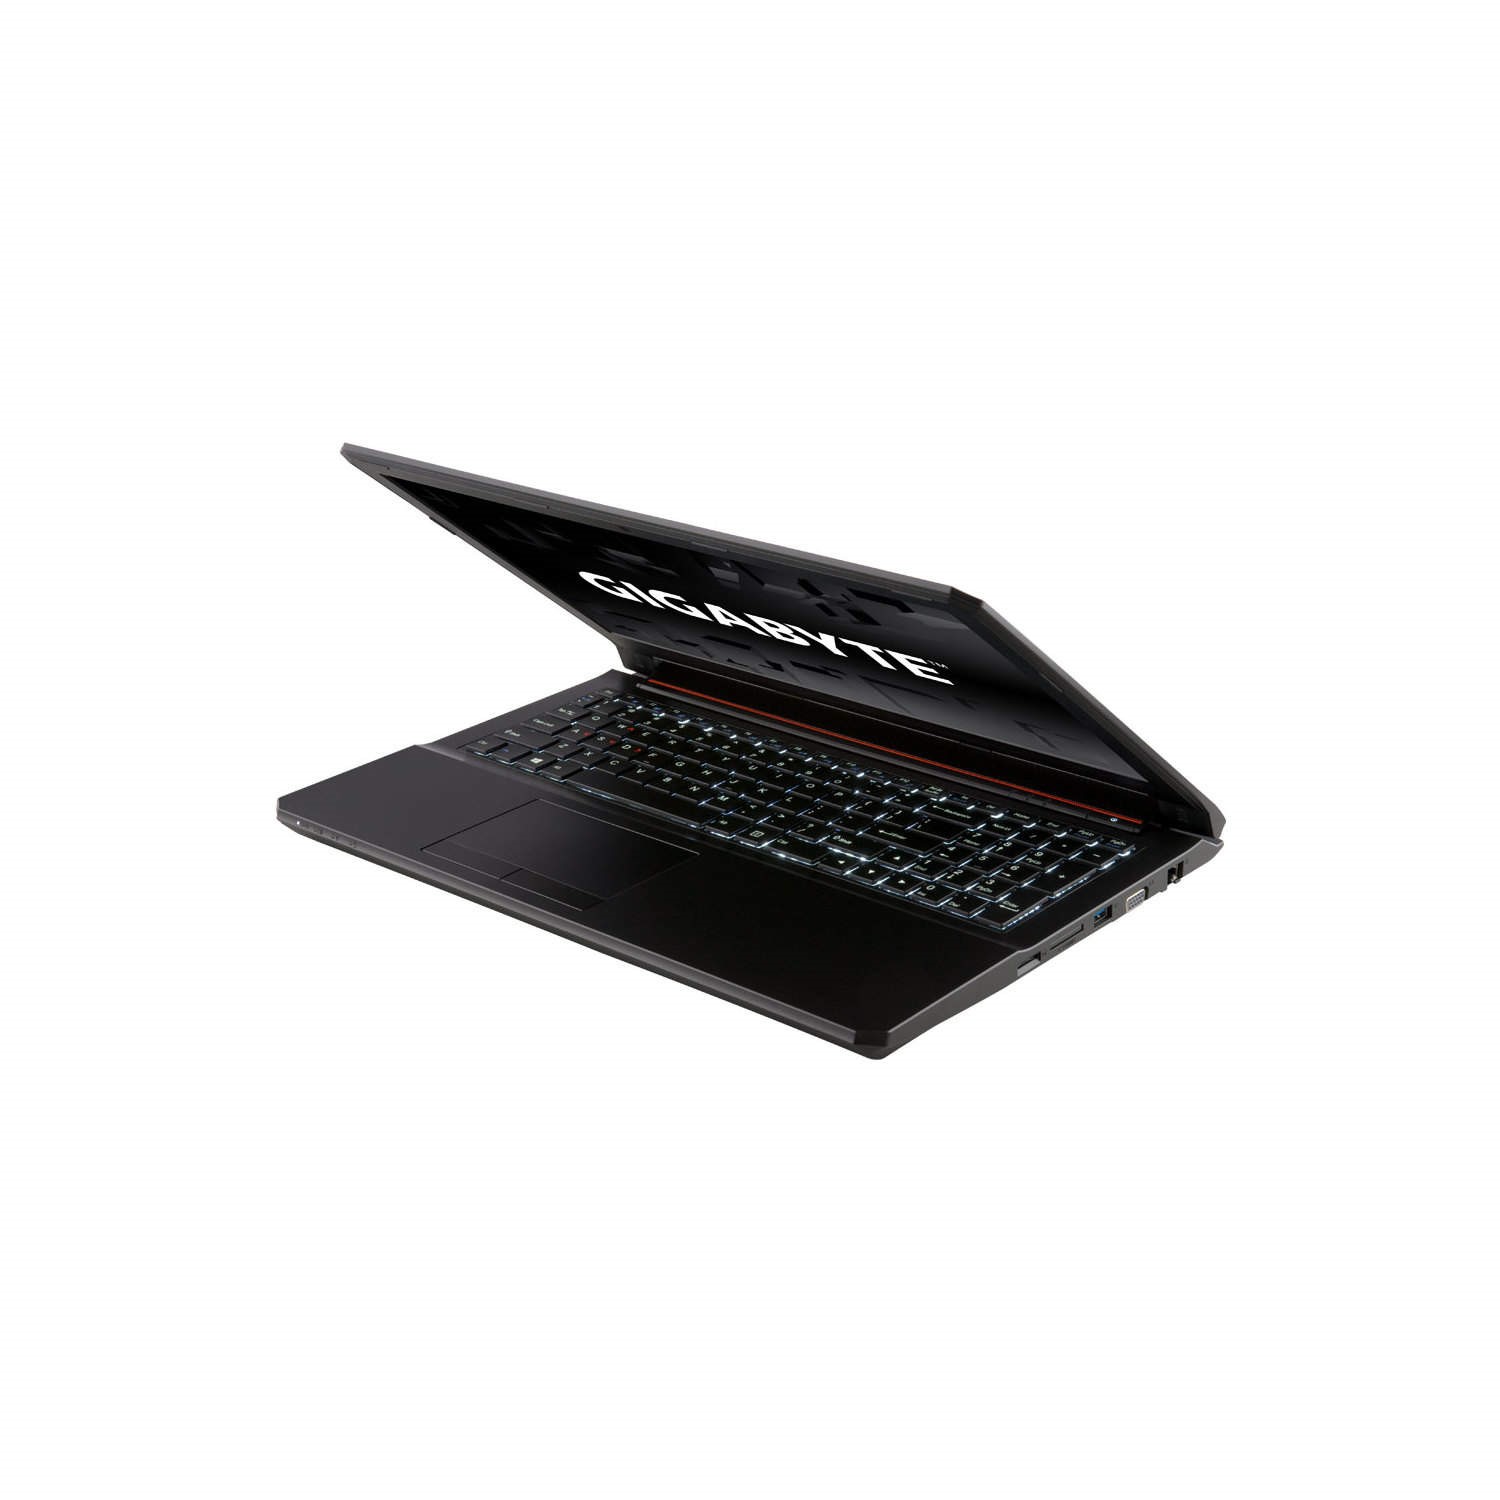 Gigabyte P16g Cf1 Core I7 6700hq 16gb 1tb 256gb Ssd Geforce Gtx 960m 2gb Dvd Rw 15 6 Inch Windows 10 Gaming Laptop Laptops Direct